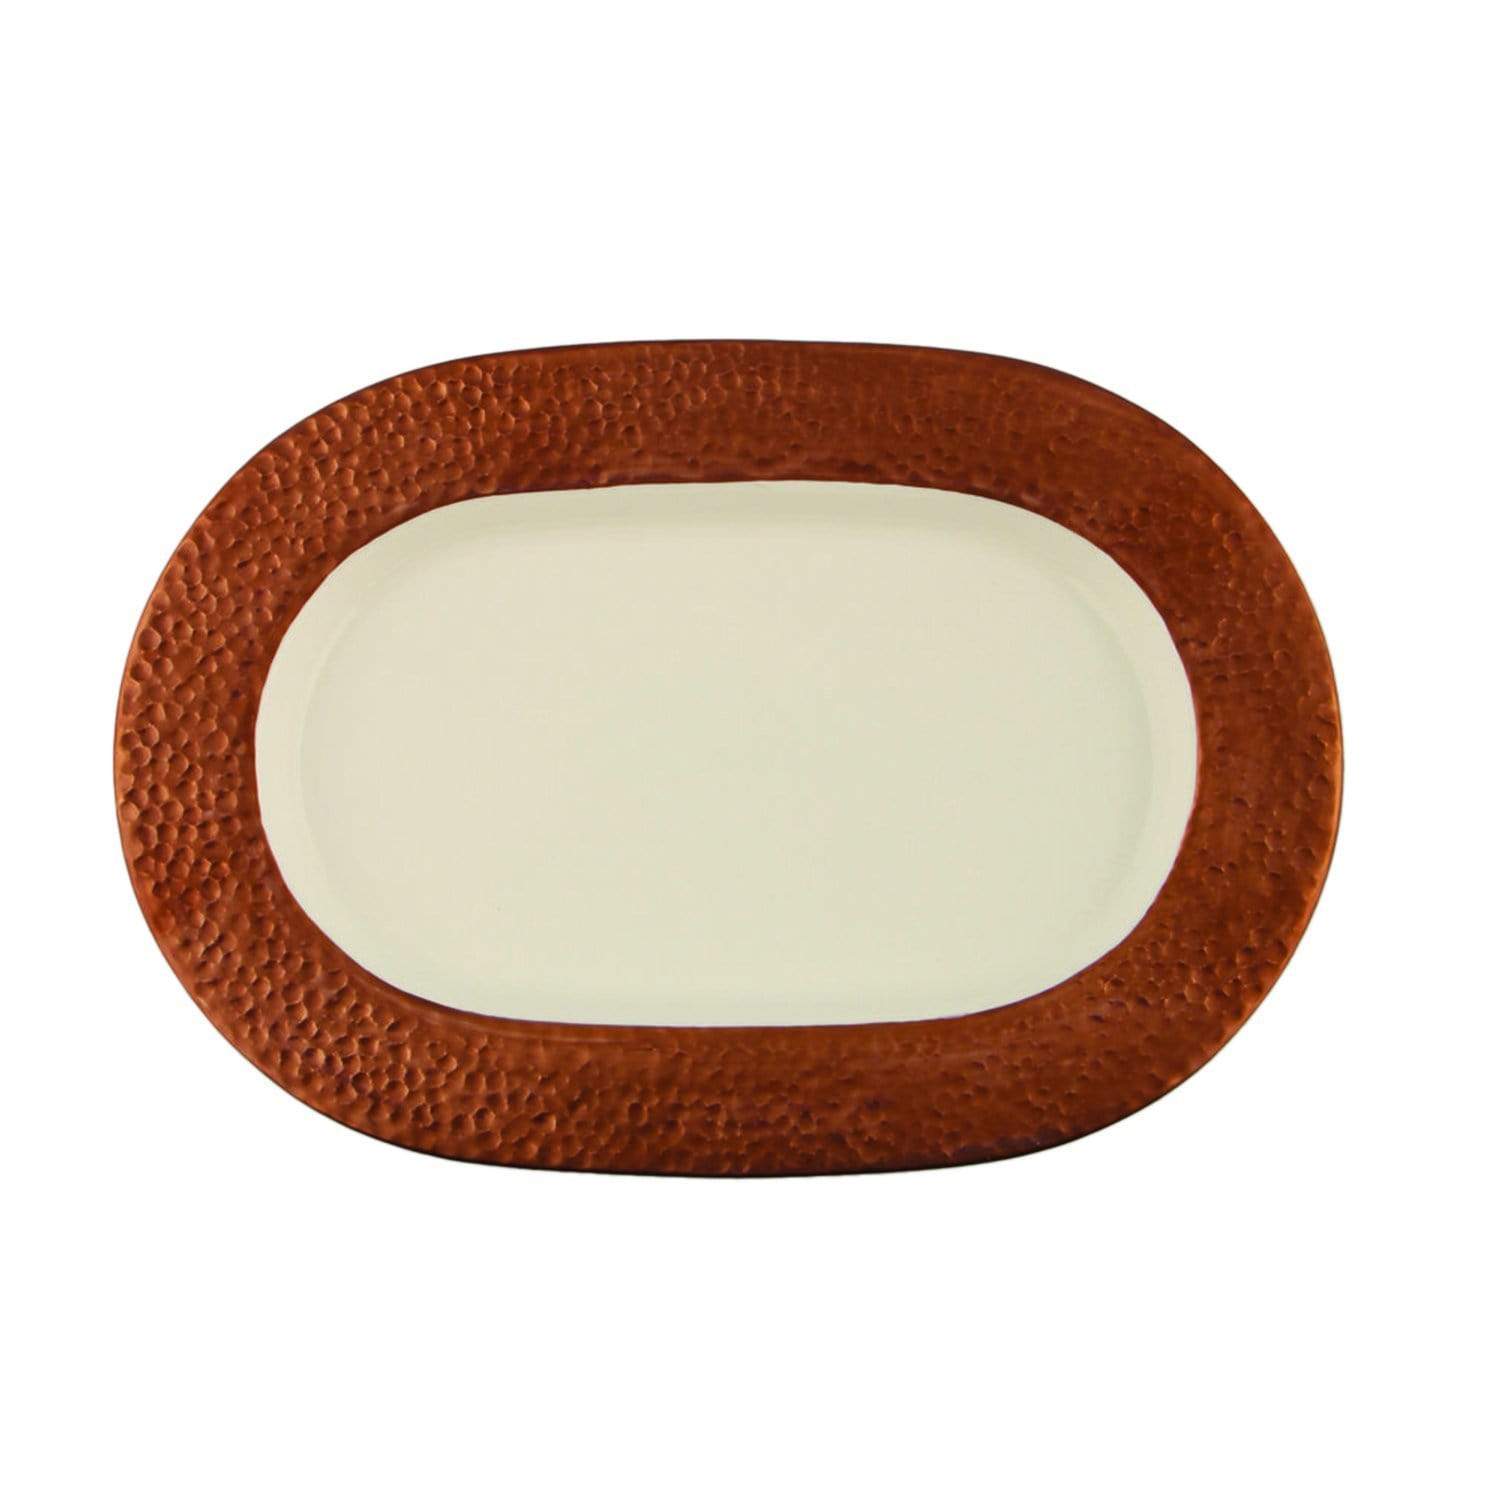 Porland Porselen Legacy Copper Oval Serving Plate - 24 cm - 04ALM004351 - Jashanmal Home